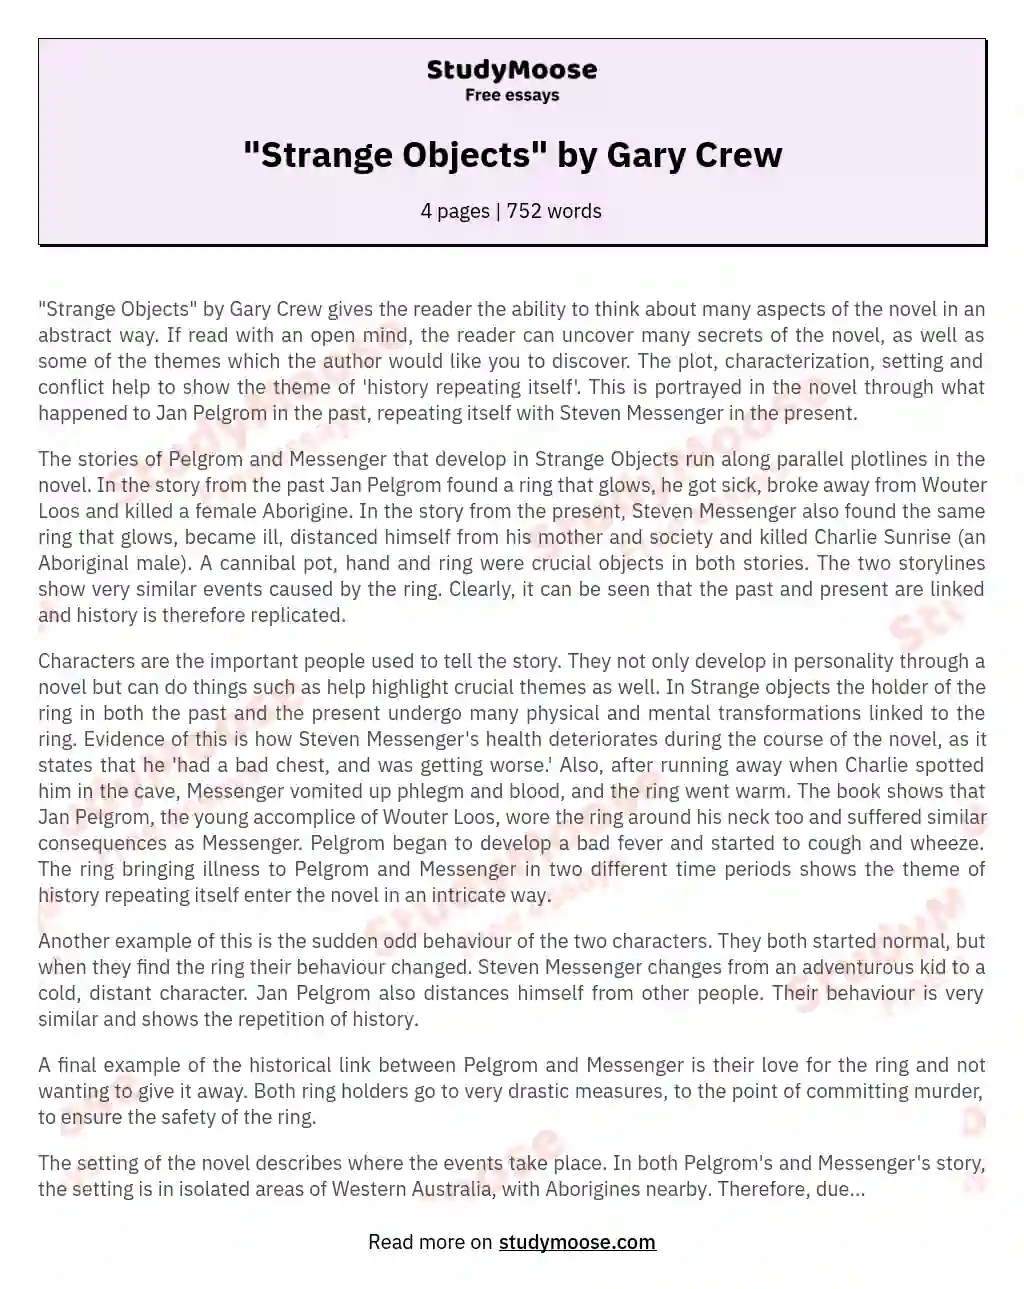 "Strange Objects" by Gary Crew